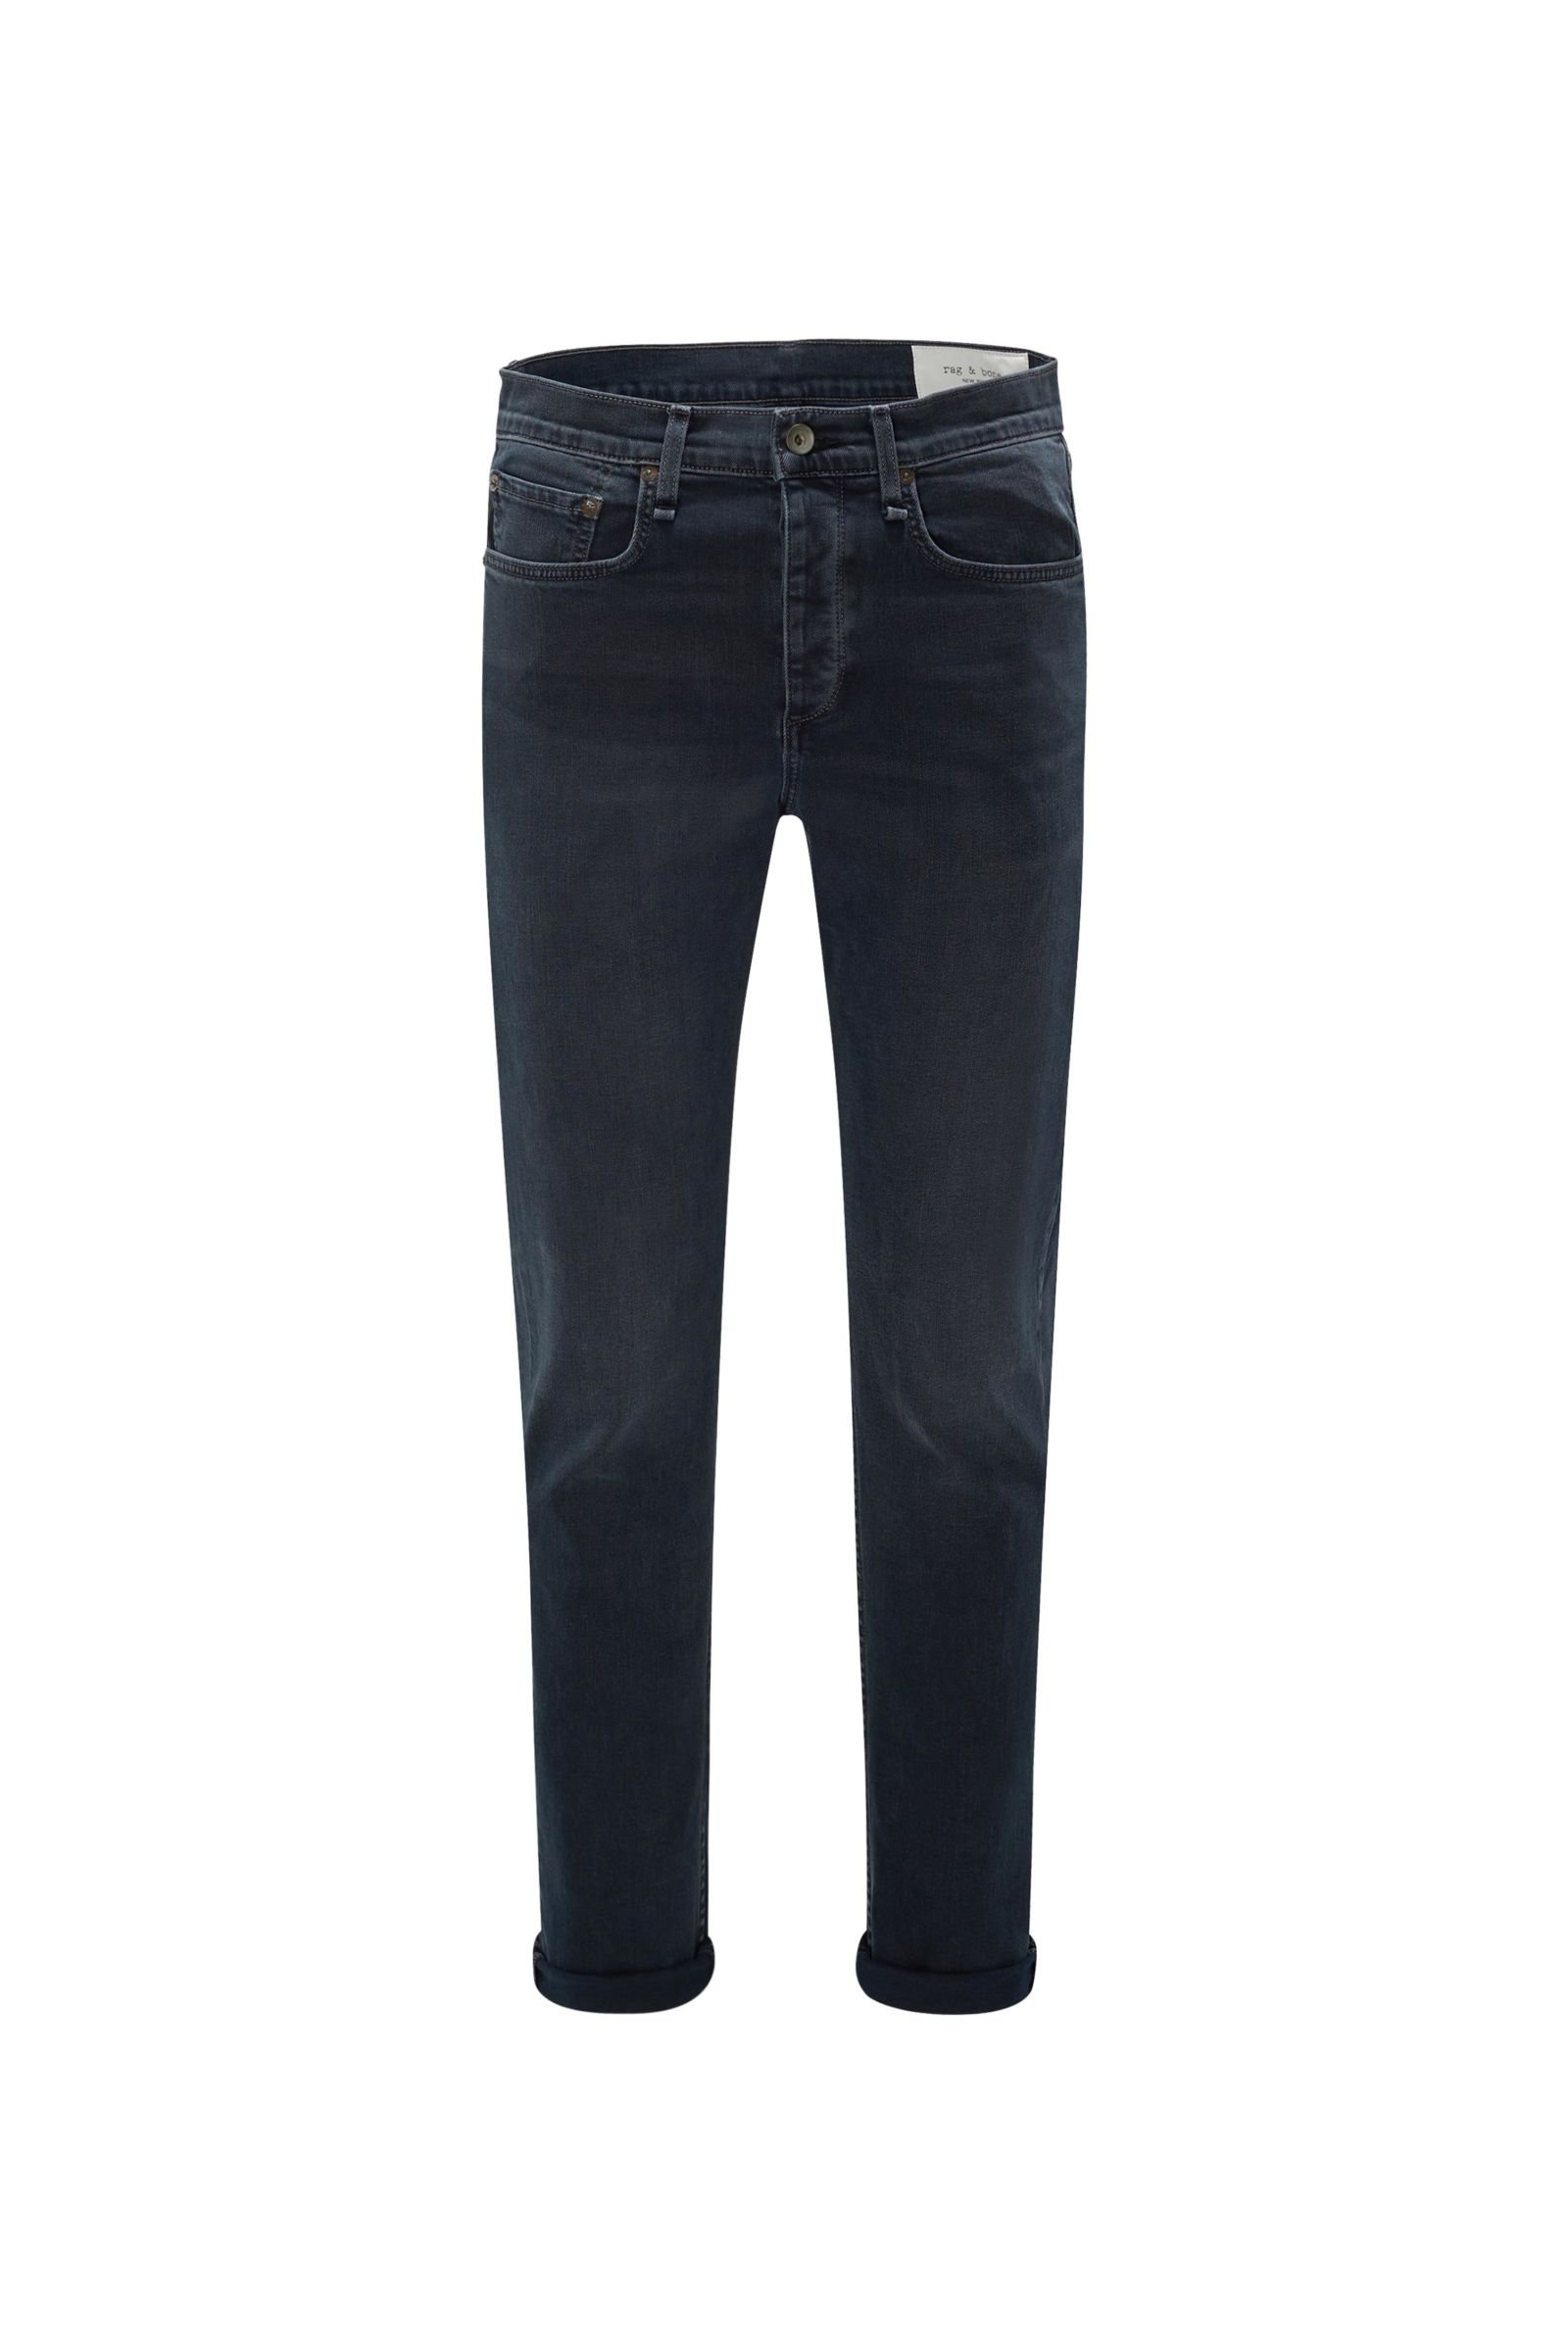 Jeans 'Fit 2' grey-blue